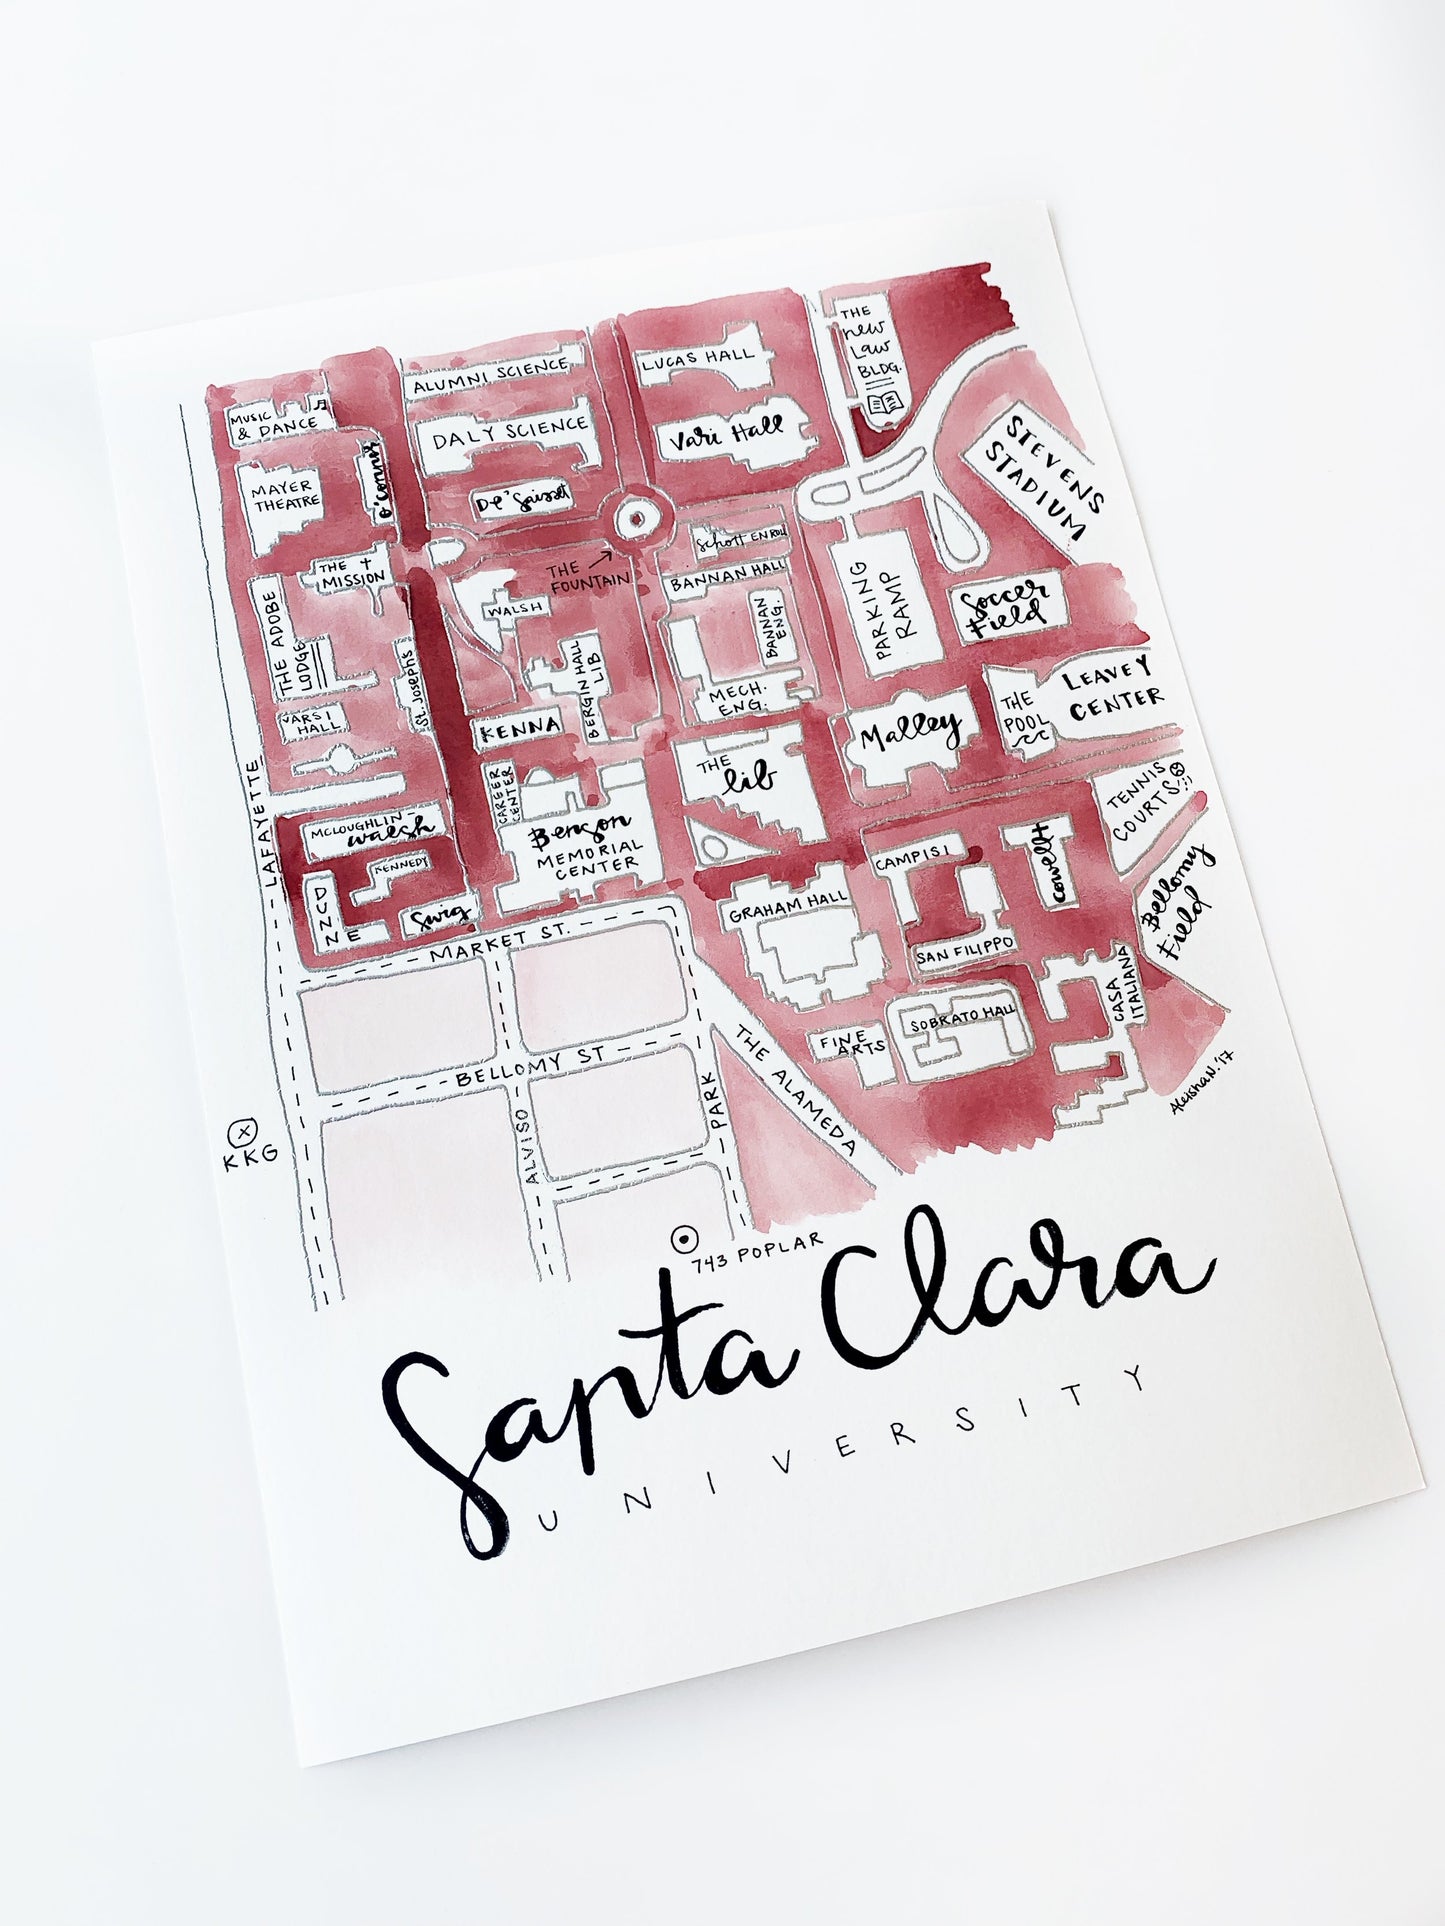 Hand Painted Santa Clara University Campus Map